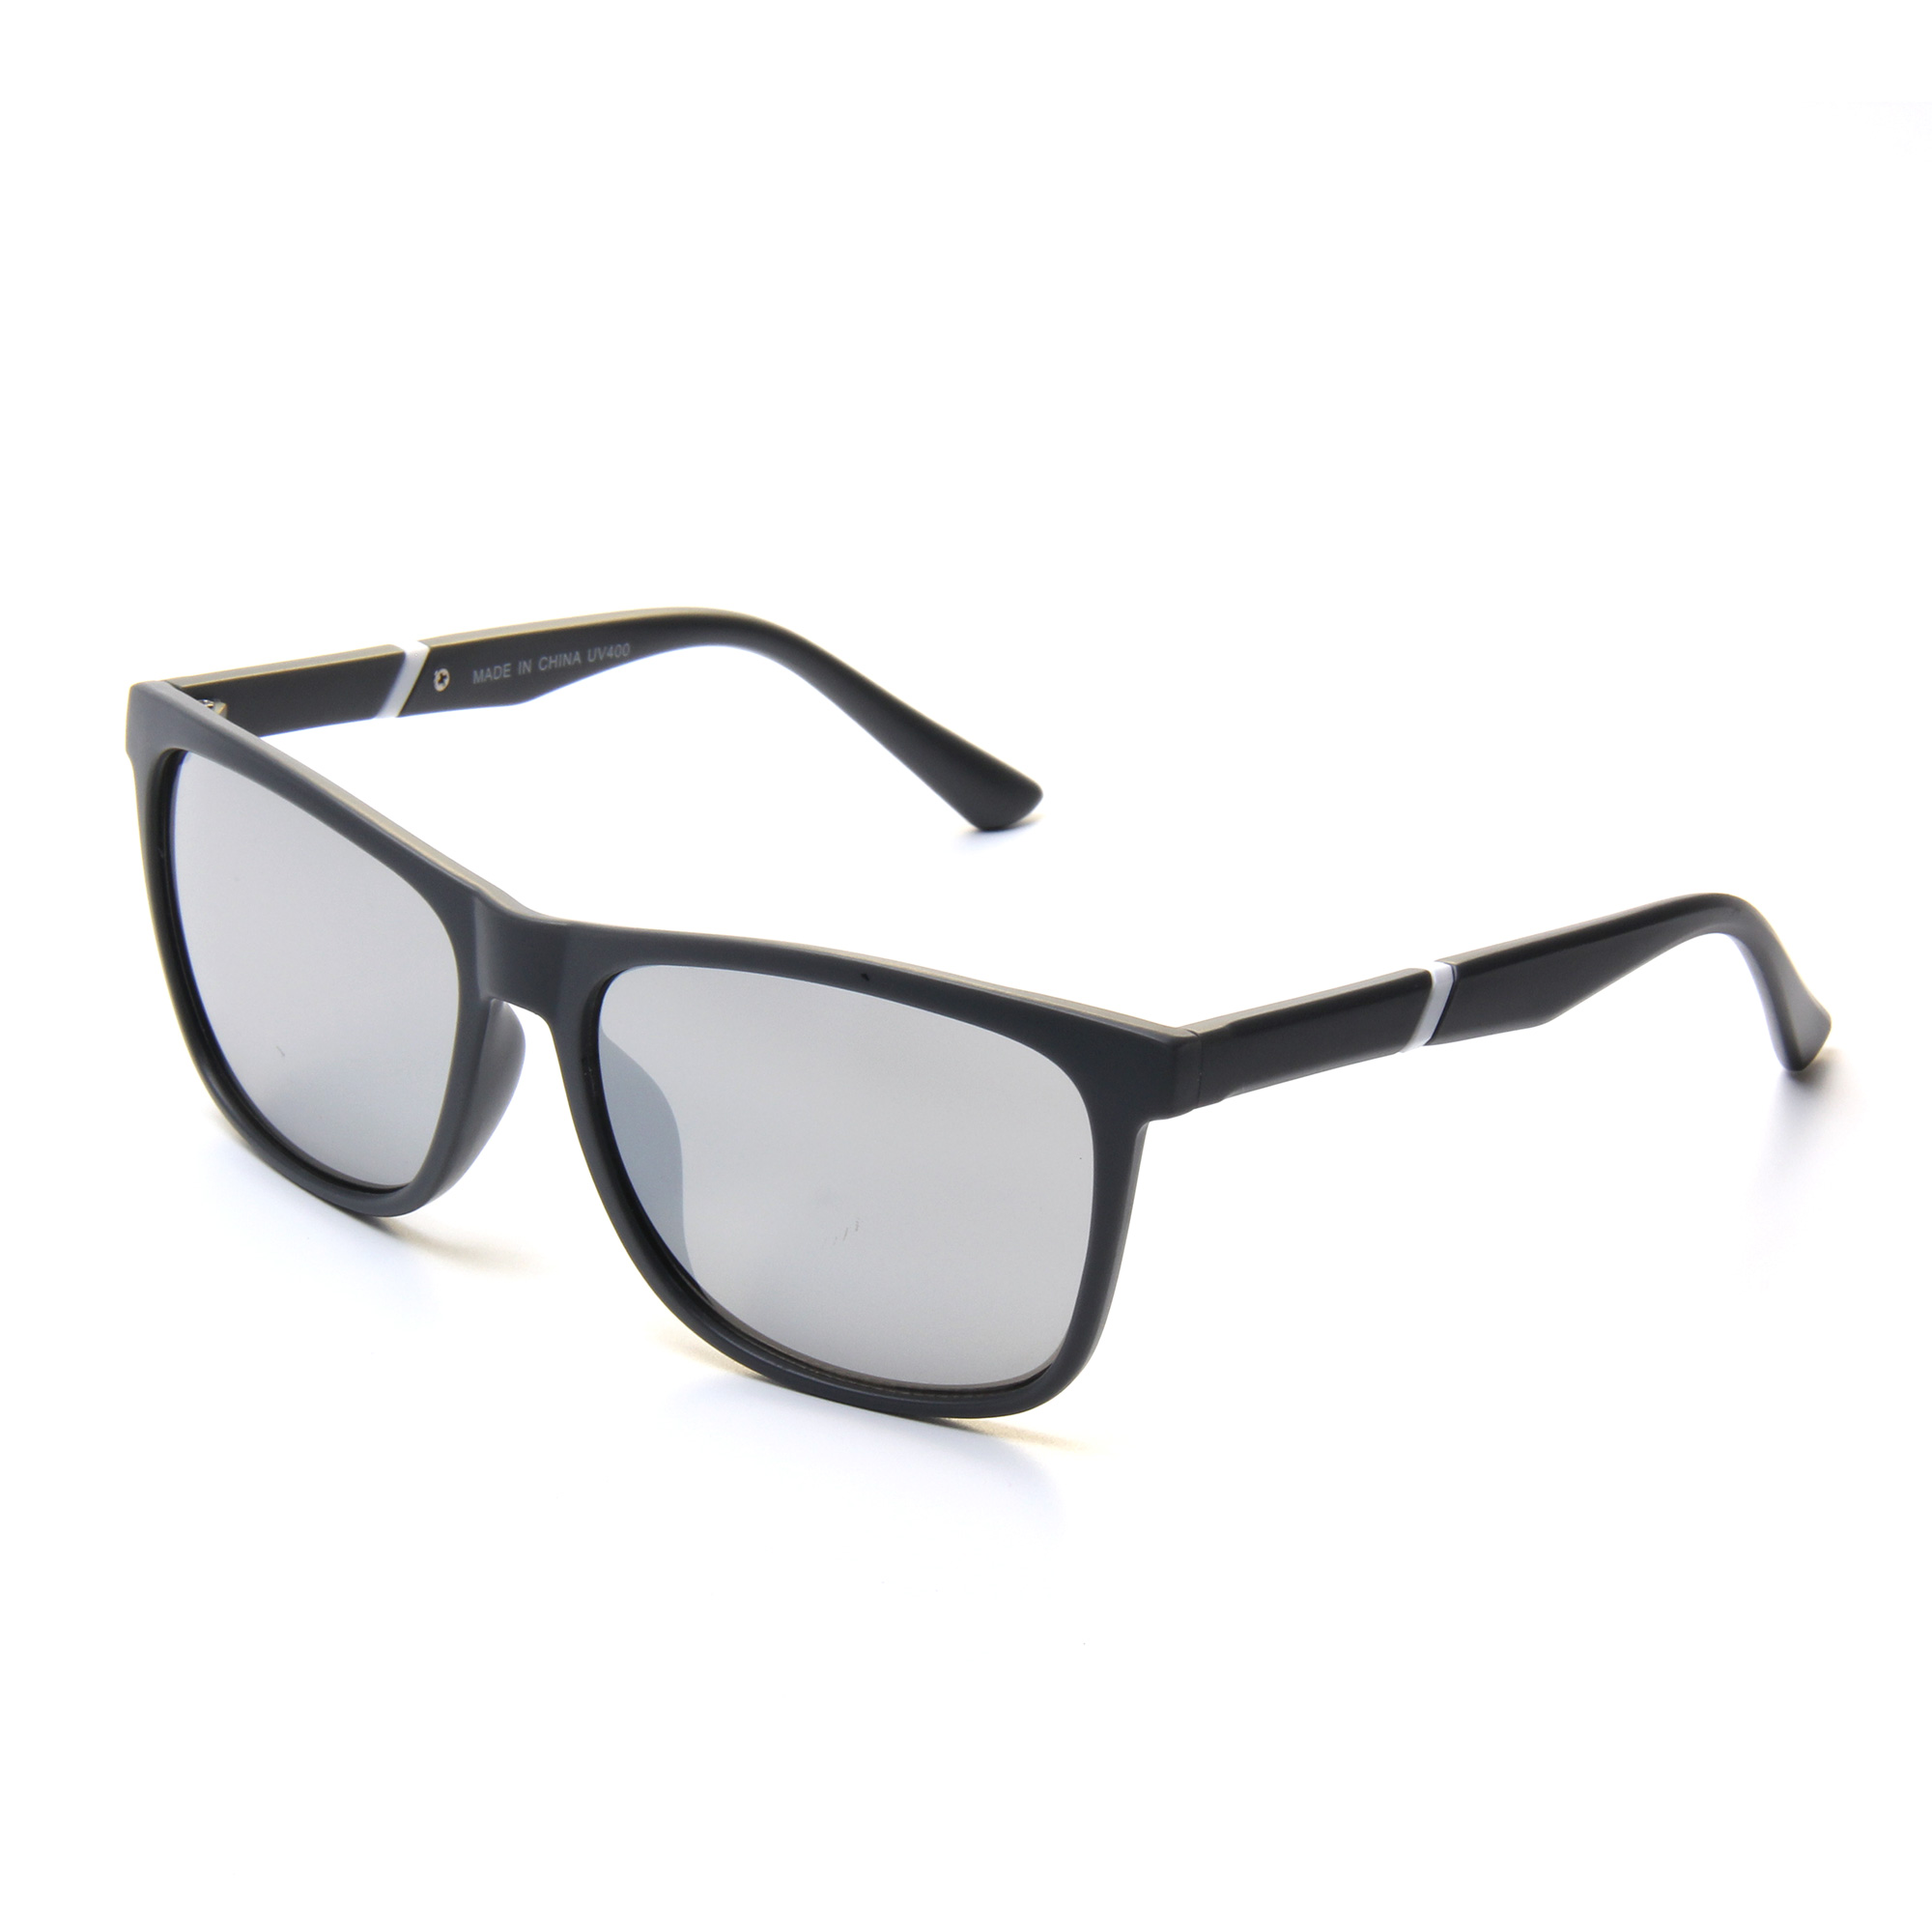 Eugenia fashion classic mens sunglasses for outdoor-1